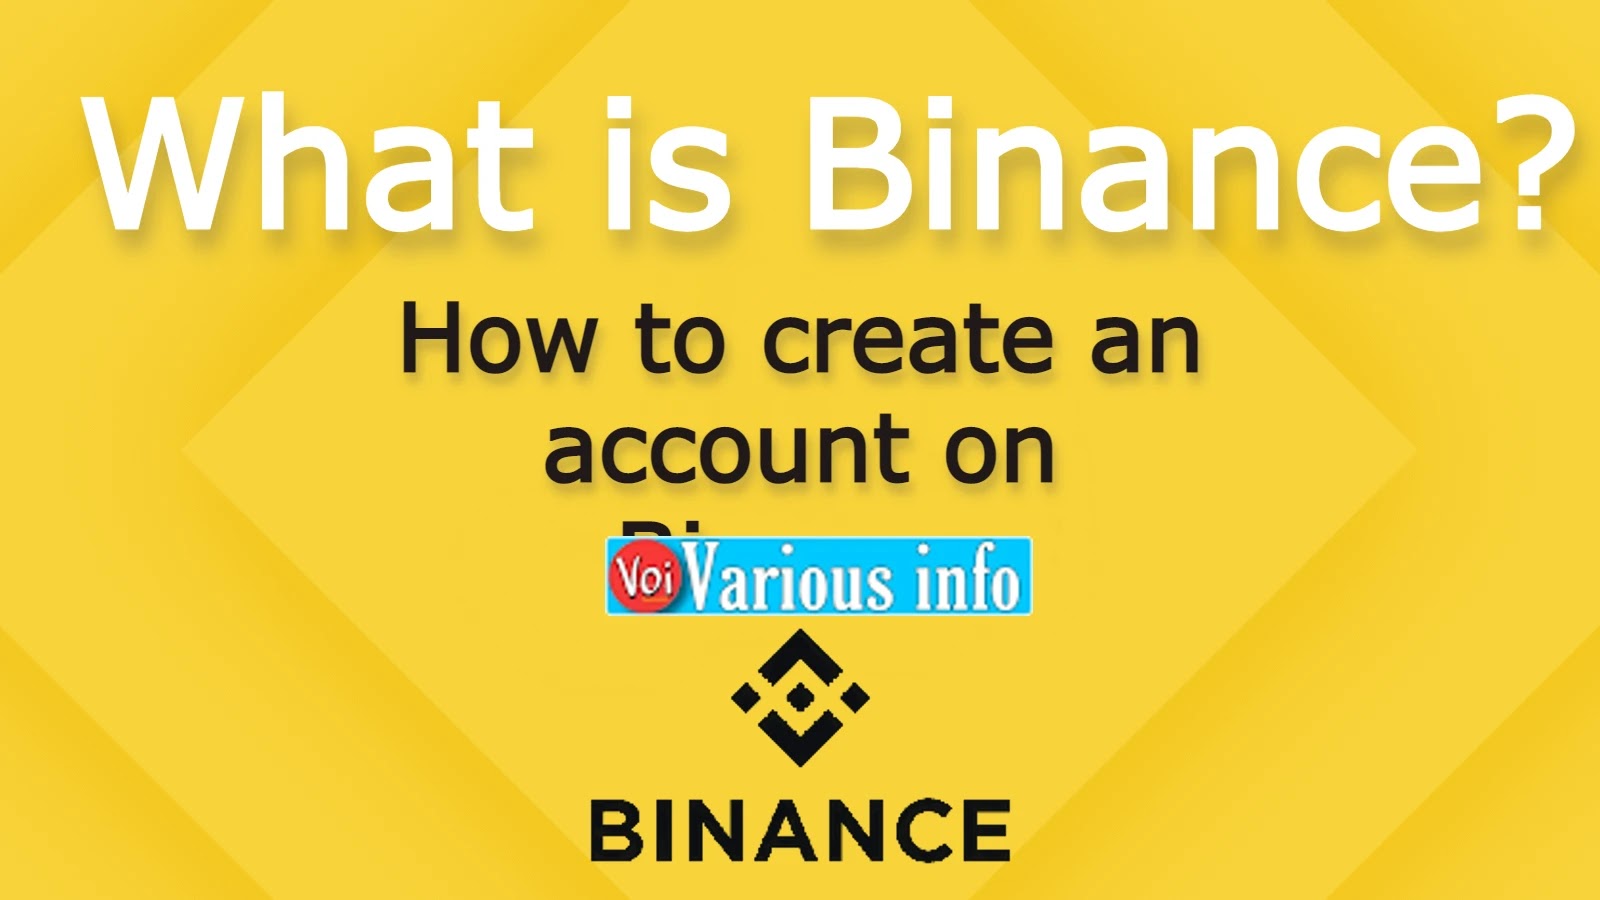 What is Binance? How to create an account on Binance